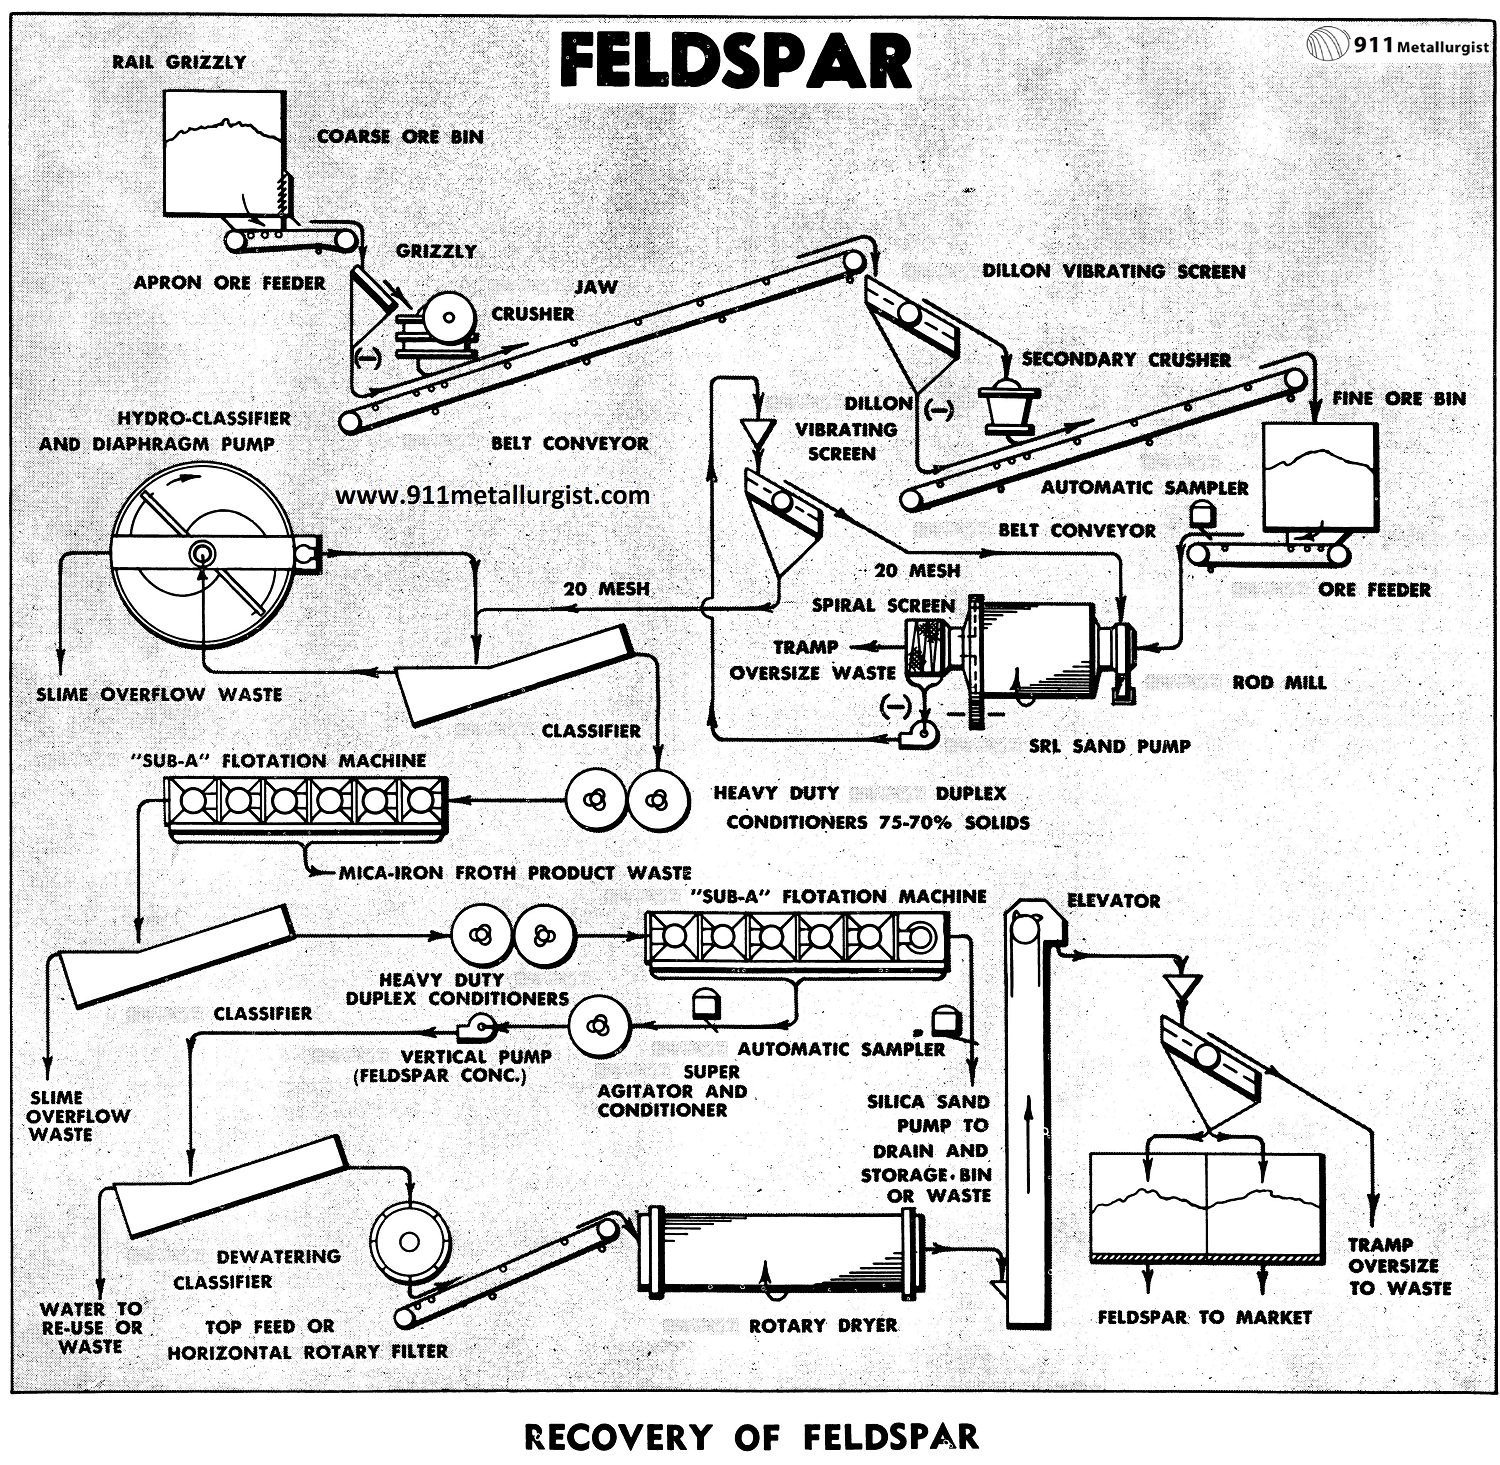 Recovery of Feldspar